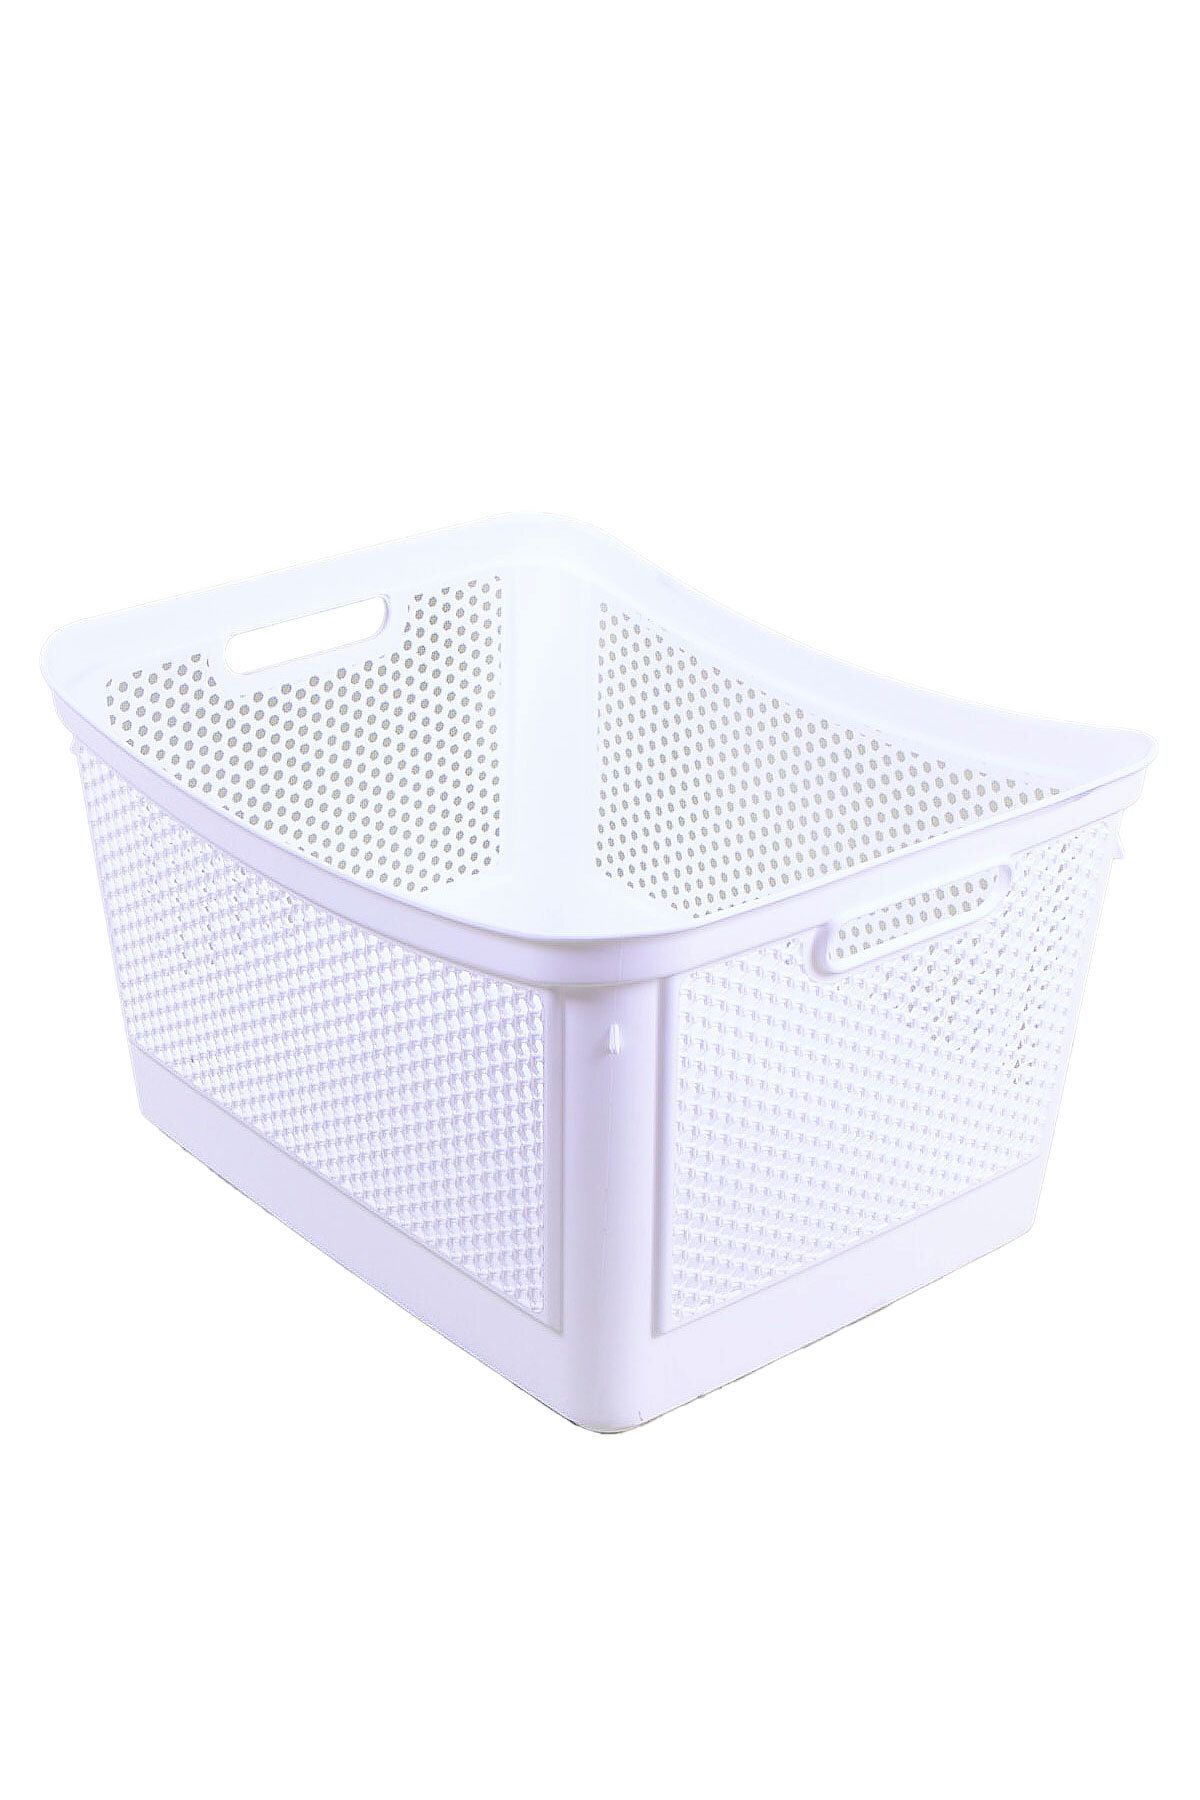 QUTU Q-basket elegance white -38 L